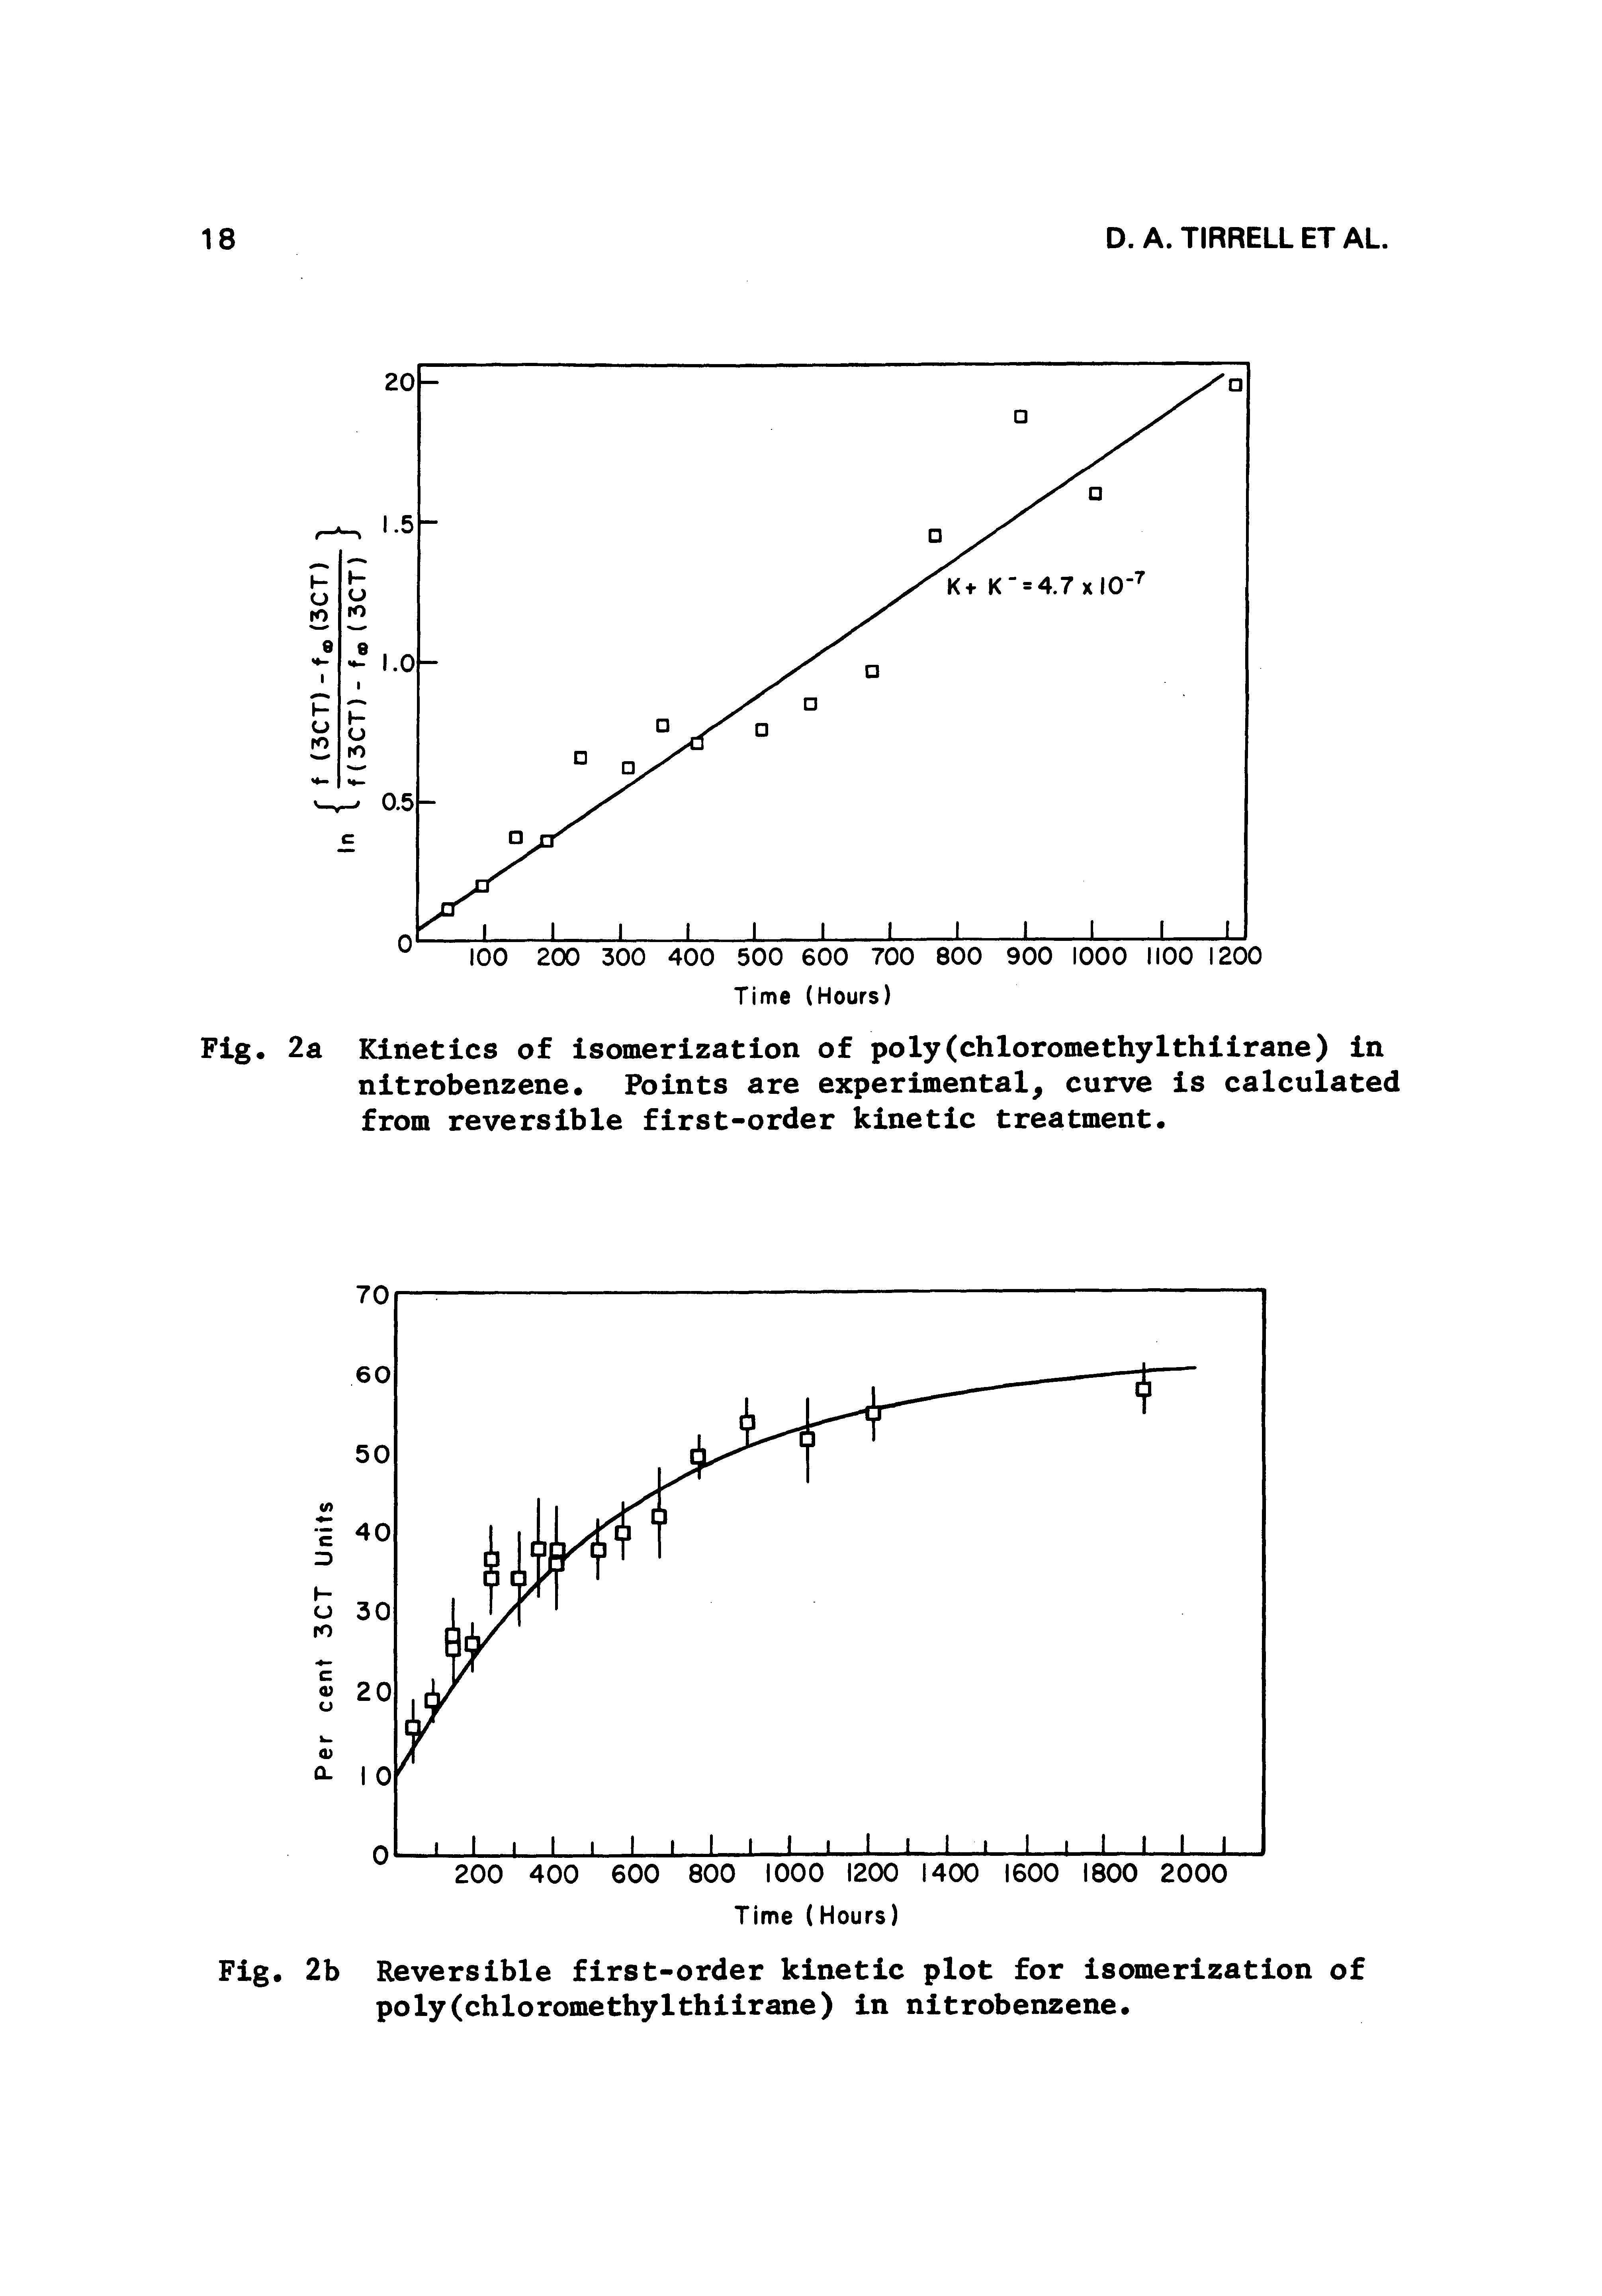 Fig. 2b Reversible first-order kinetic plot for isomerization of poly(chloromethylthiirane) in nitrobenzene.